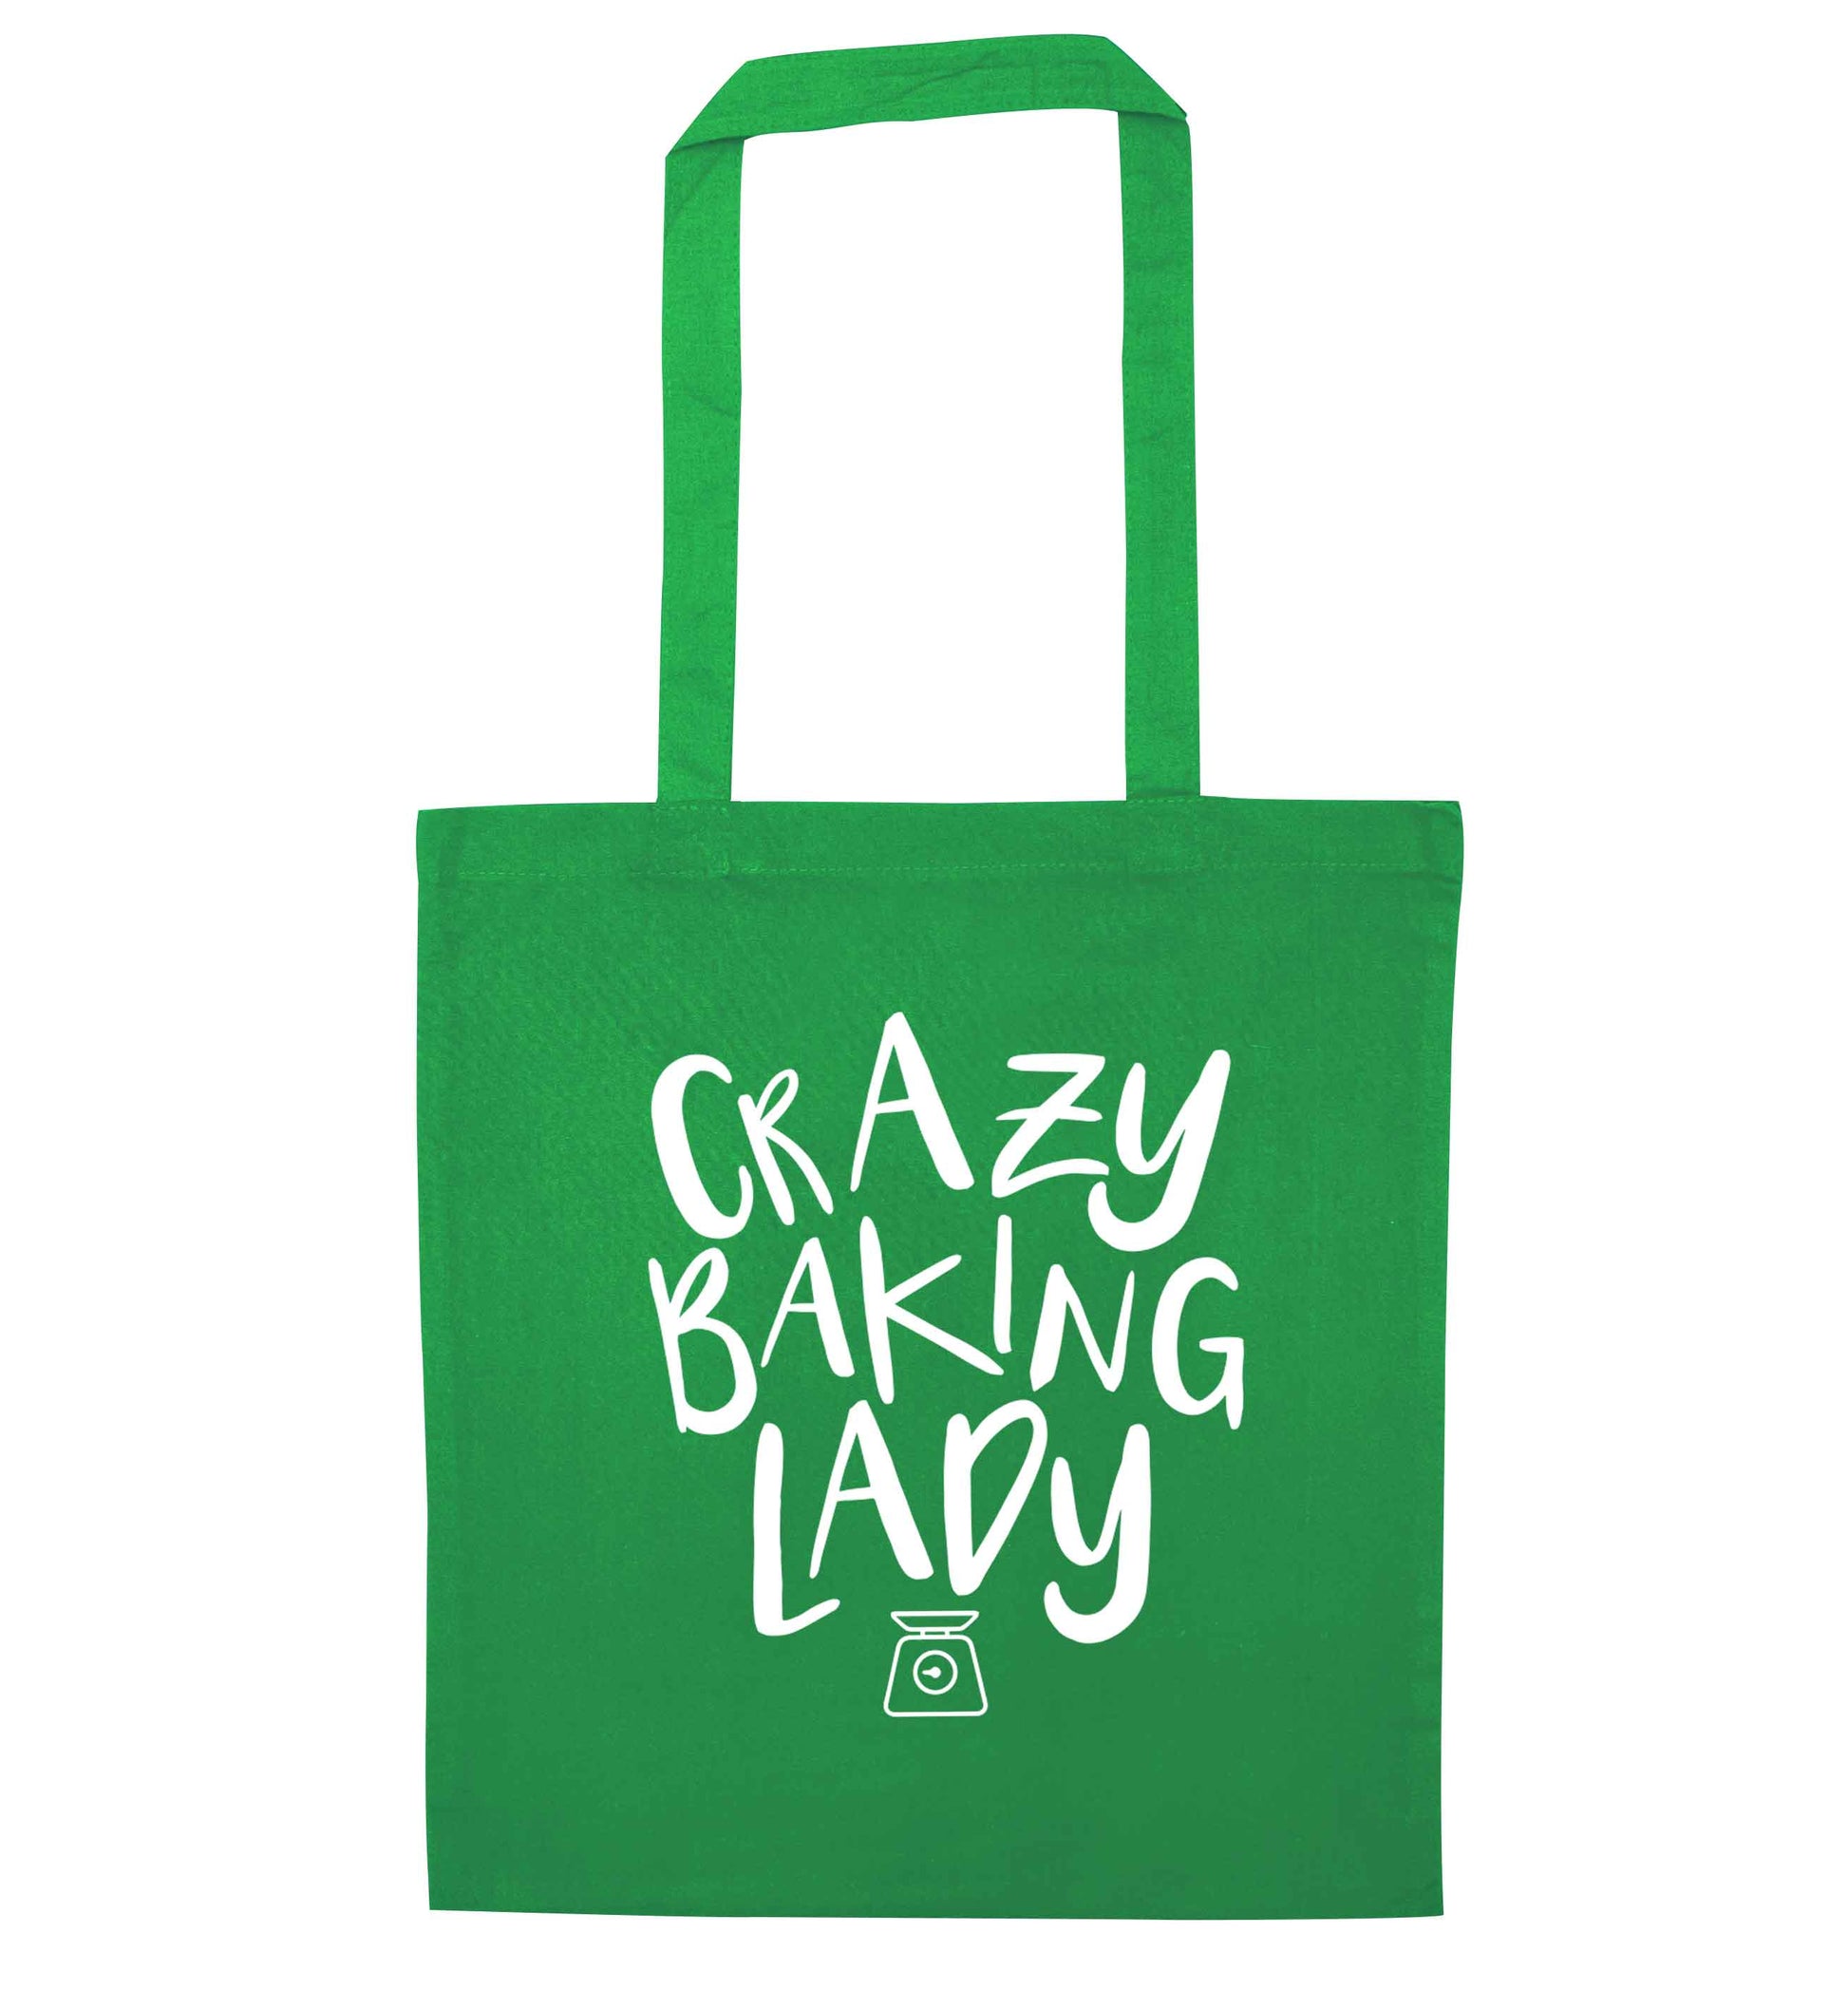 Crazy baking lady green tote bag